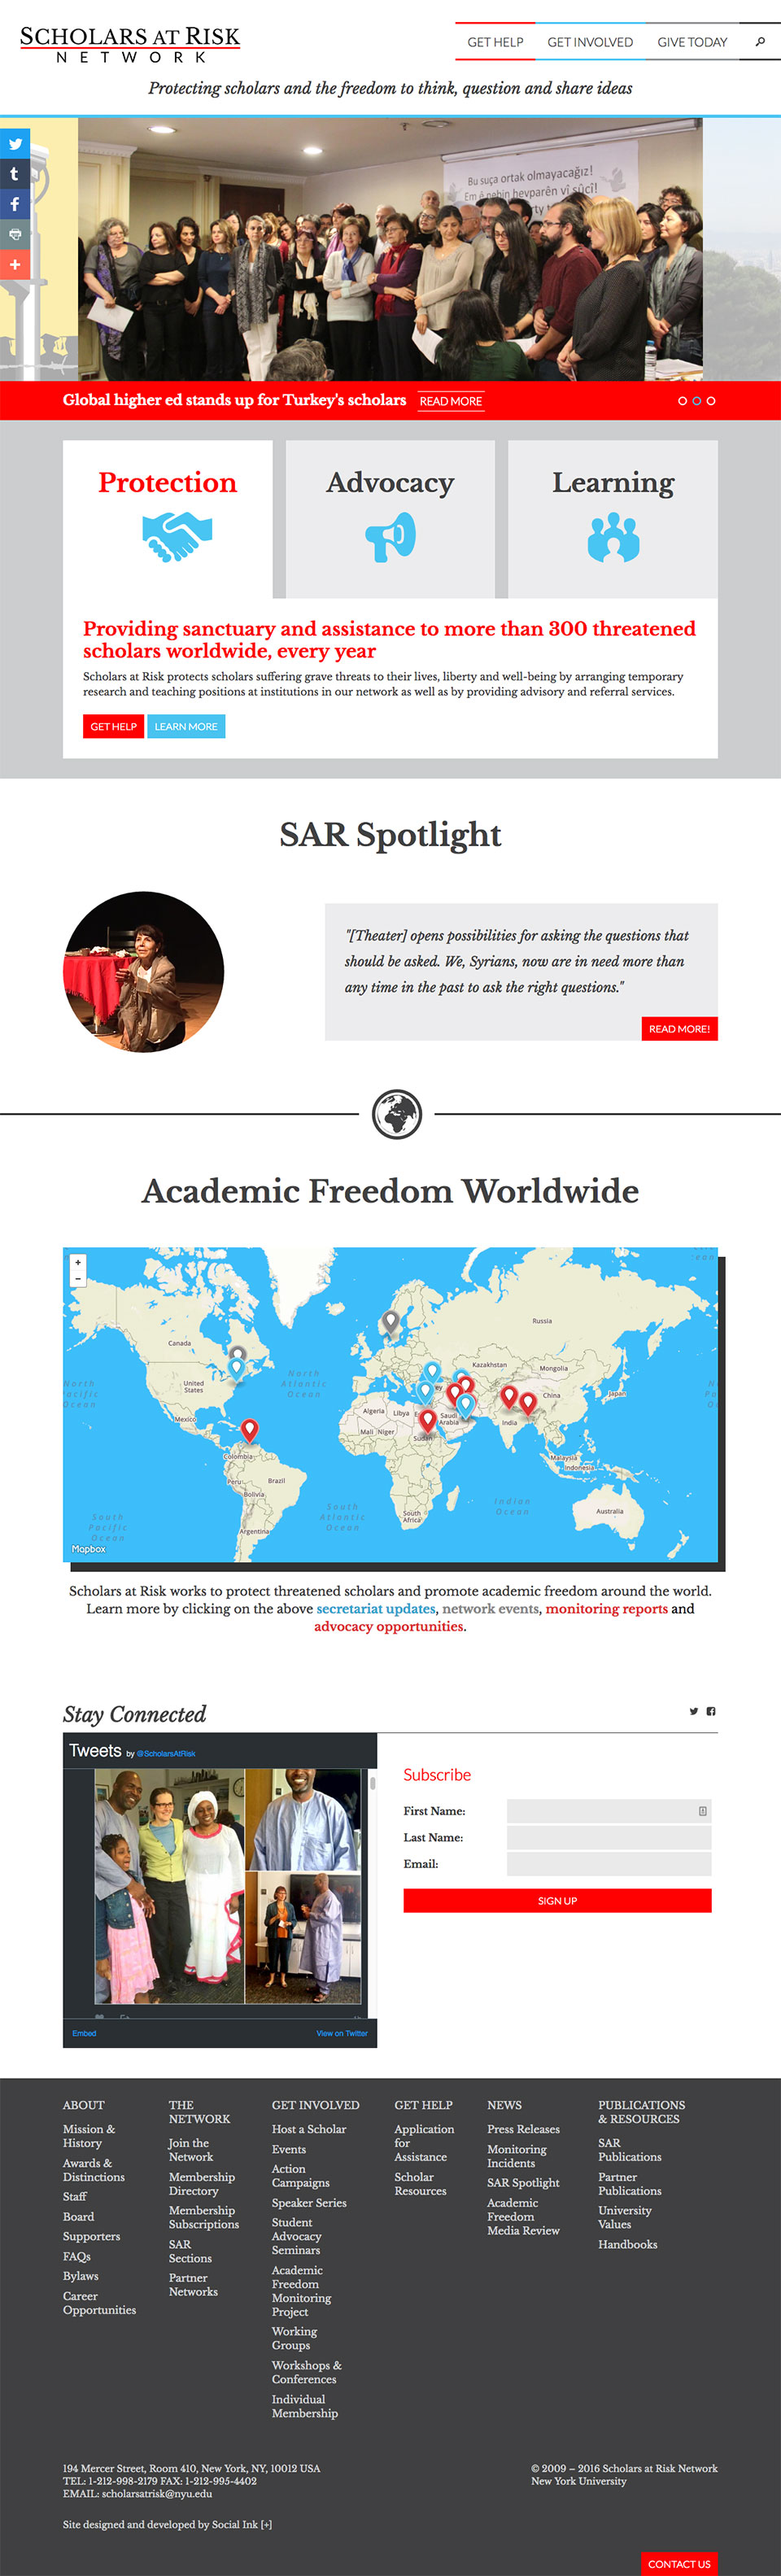 Scholars at Risk at NYU: Scholars at Risk Homepage